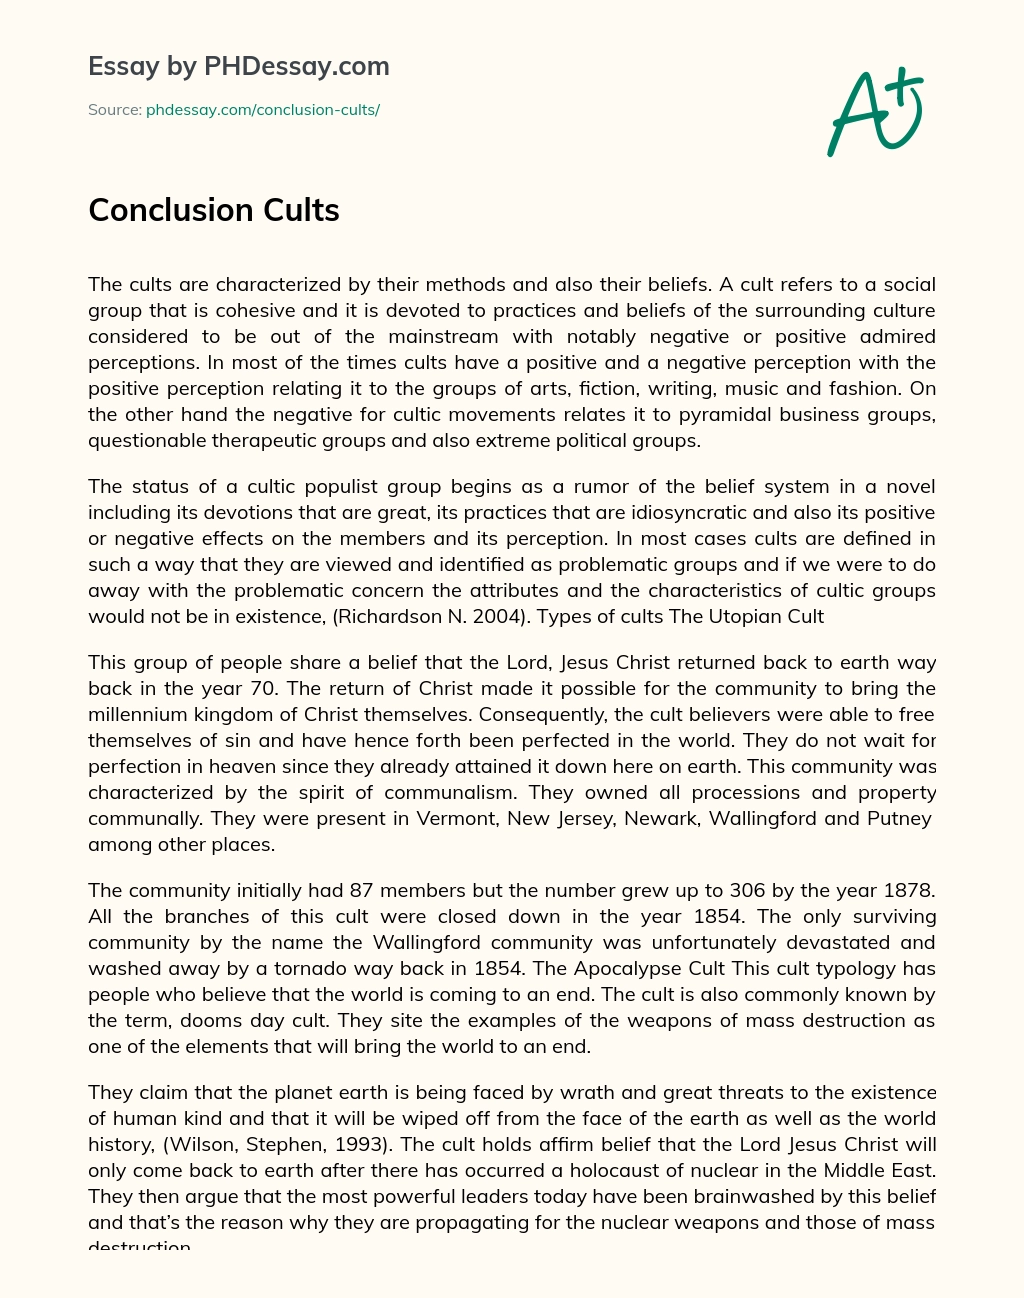 Conclusion Cults essay